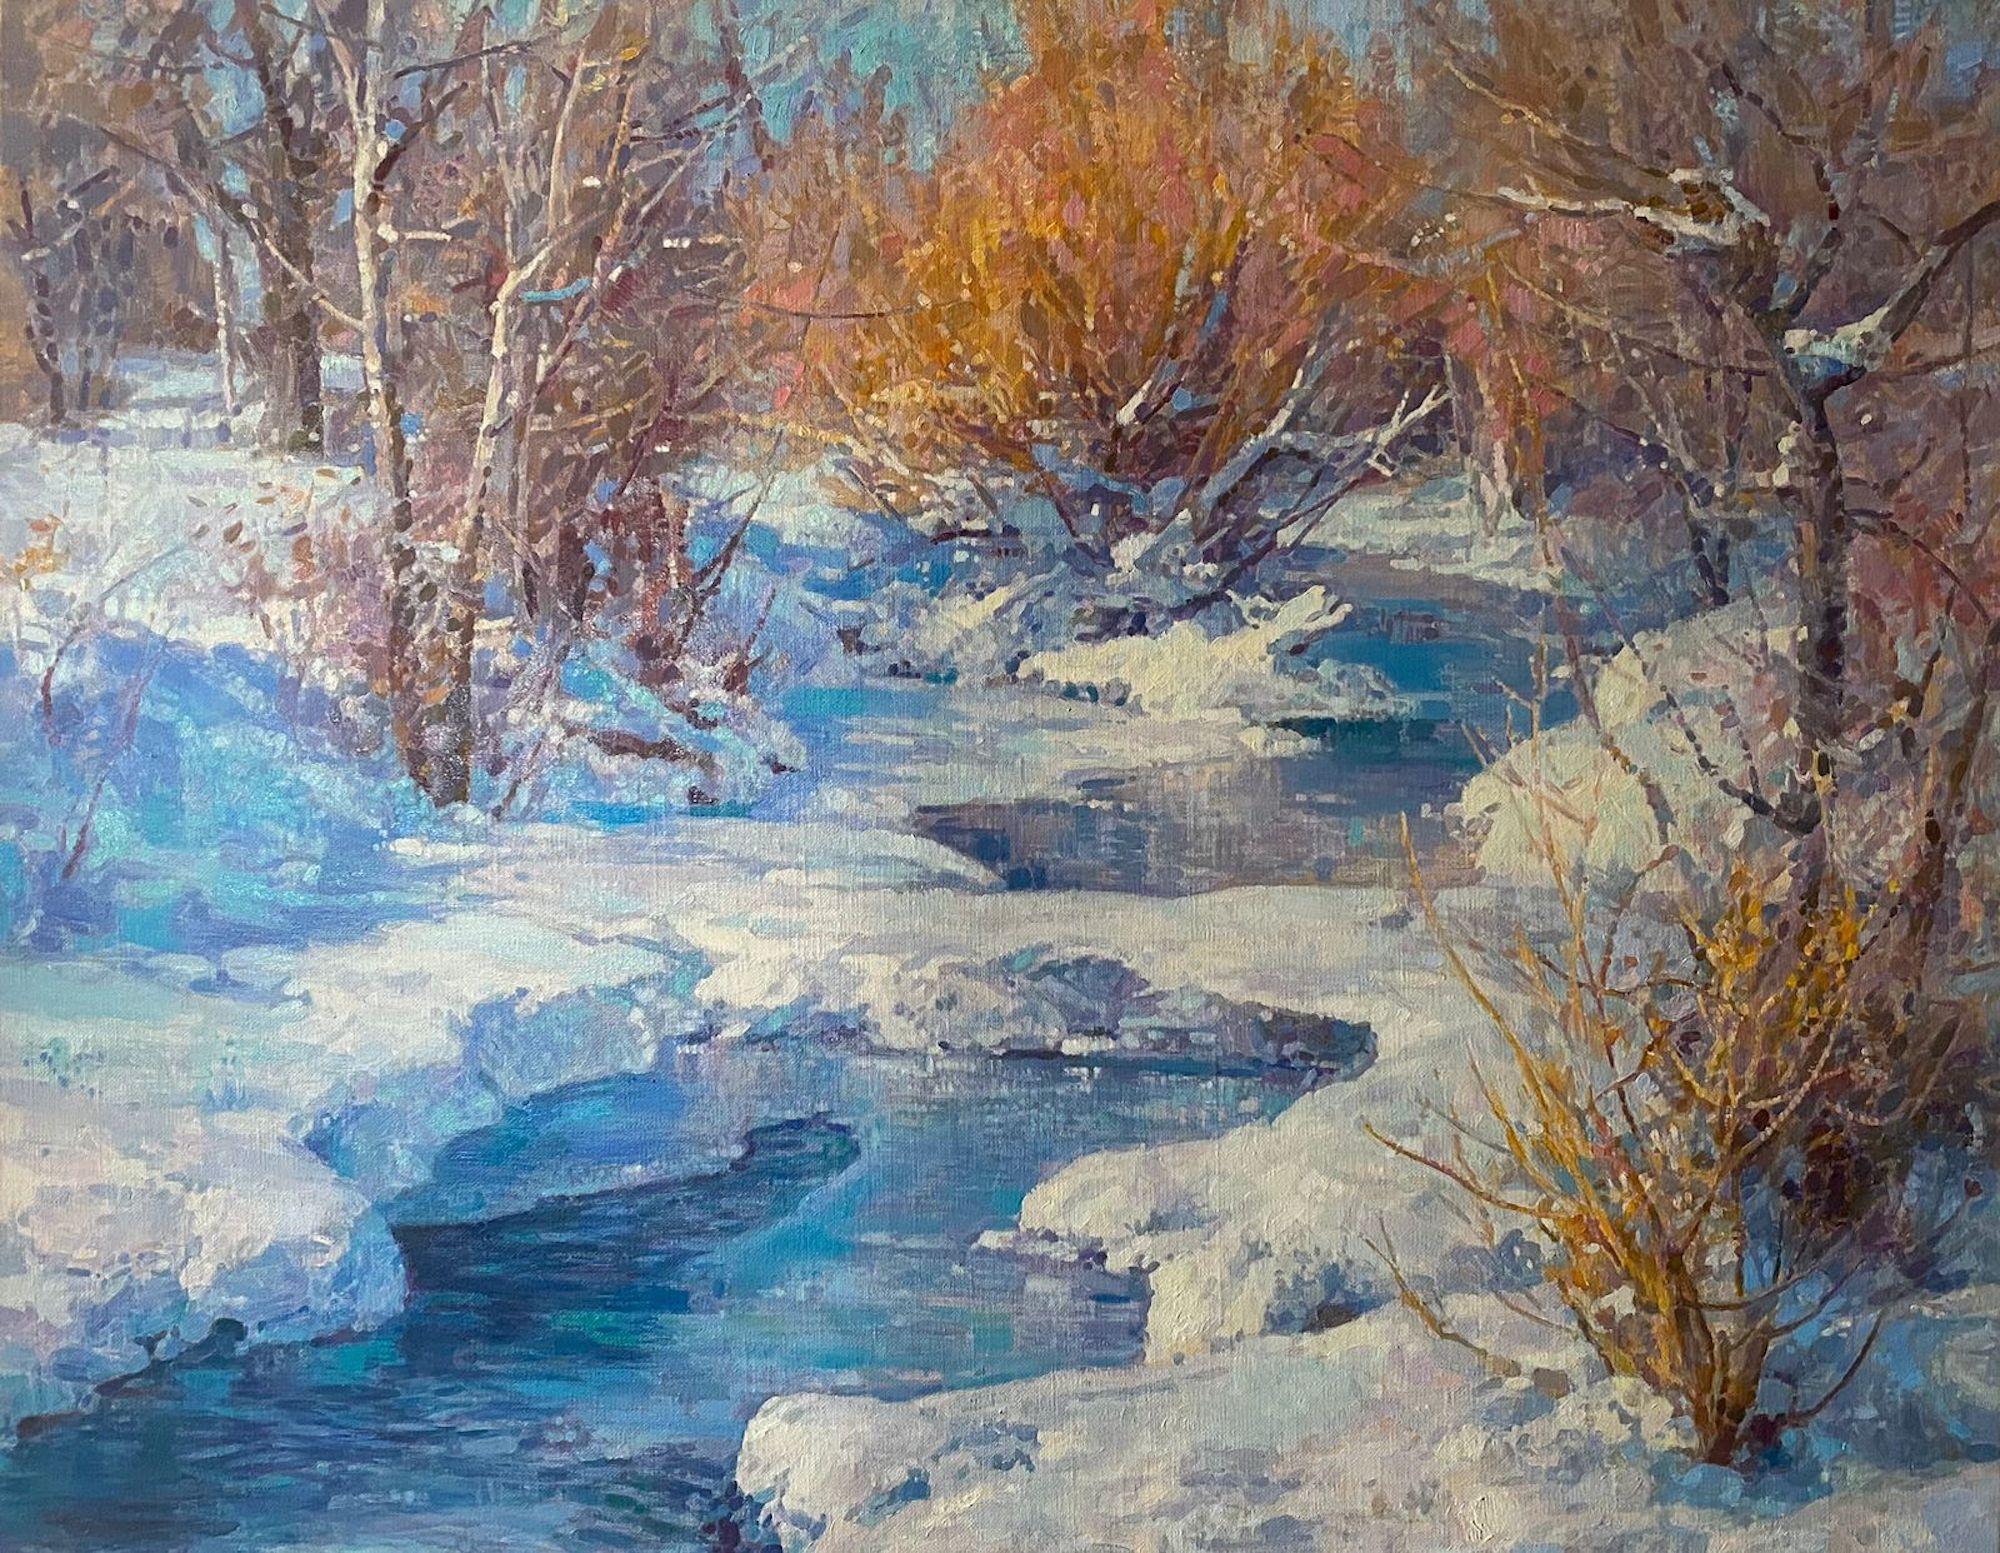 Ashot Muradyan Landscape Painting - Winter Morning, Landscape Original Oil Painting, Handmade Artwork, One of a Kind